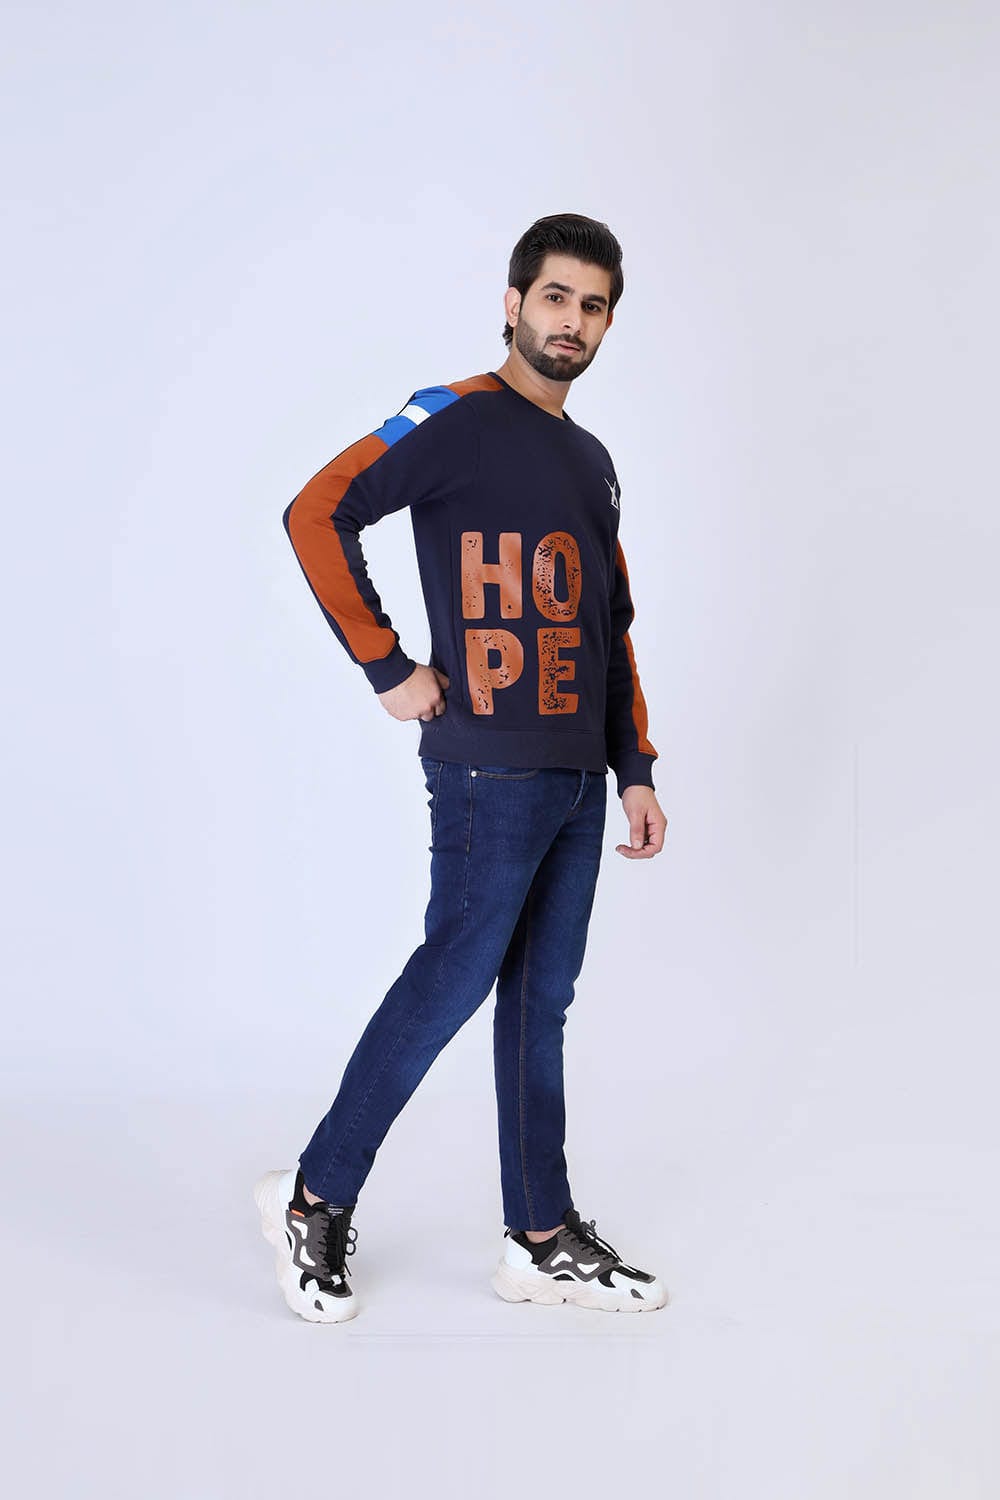 Hope Not Out by Shahid Afridi Men Sweat Shirt HOPE & LOGO SCREEN PRINT & EMB